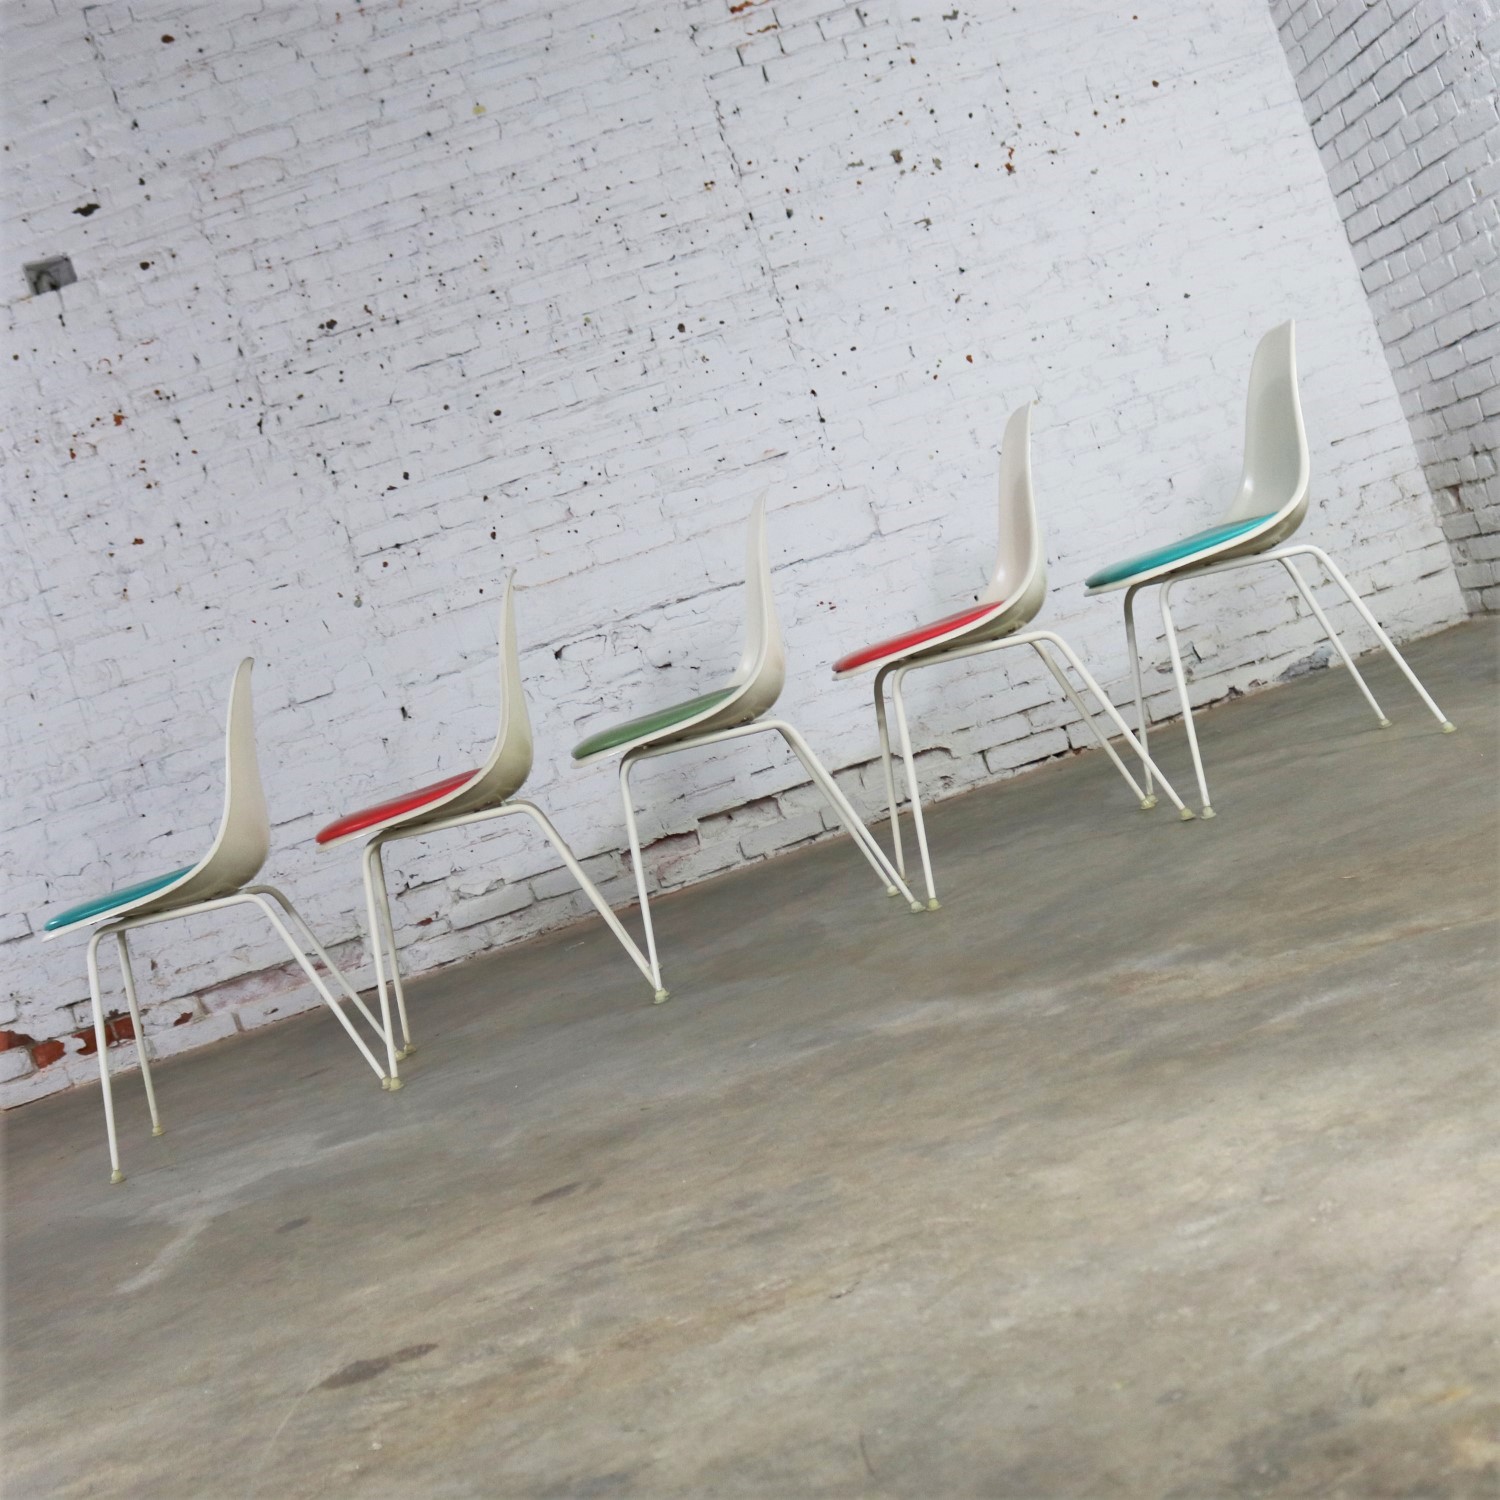 Burke Fiberglass #103 Shell Chairs with Padded Seats Set of 5 Mid Century Modern